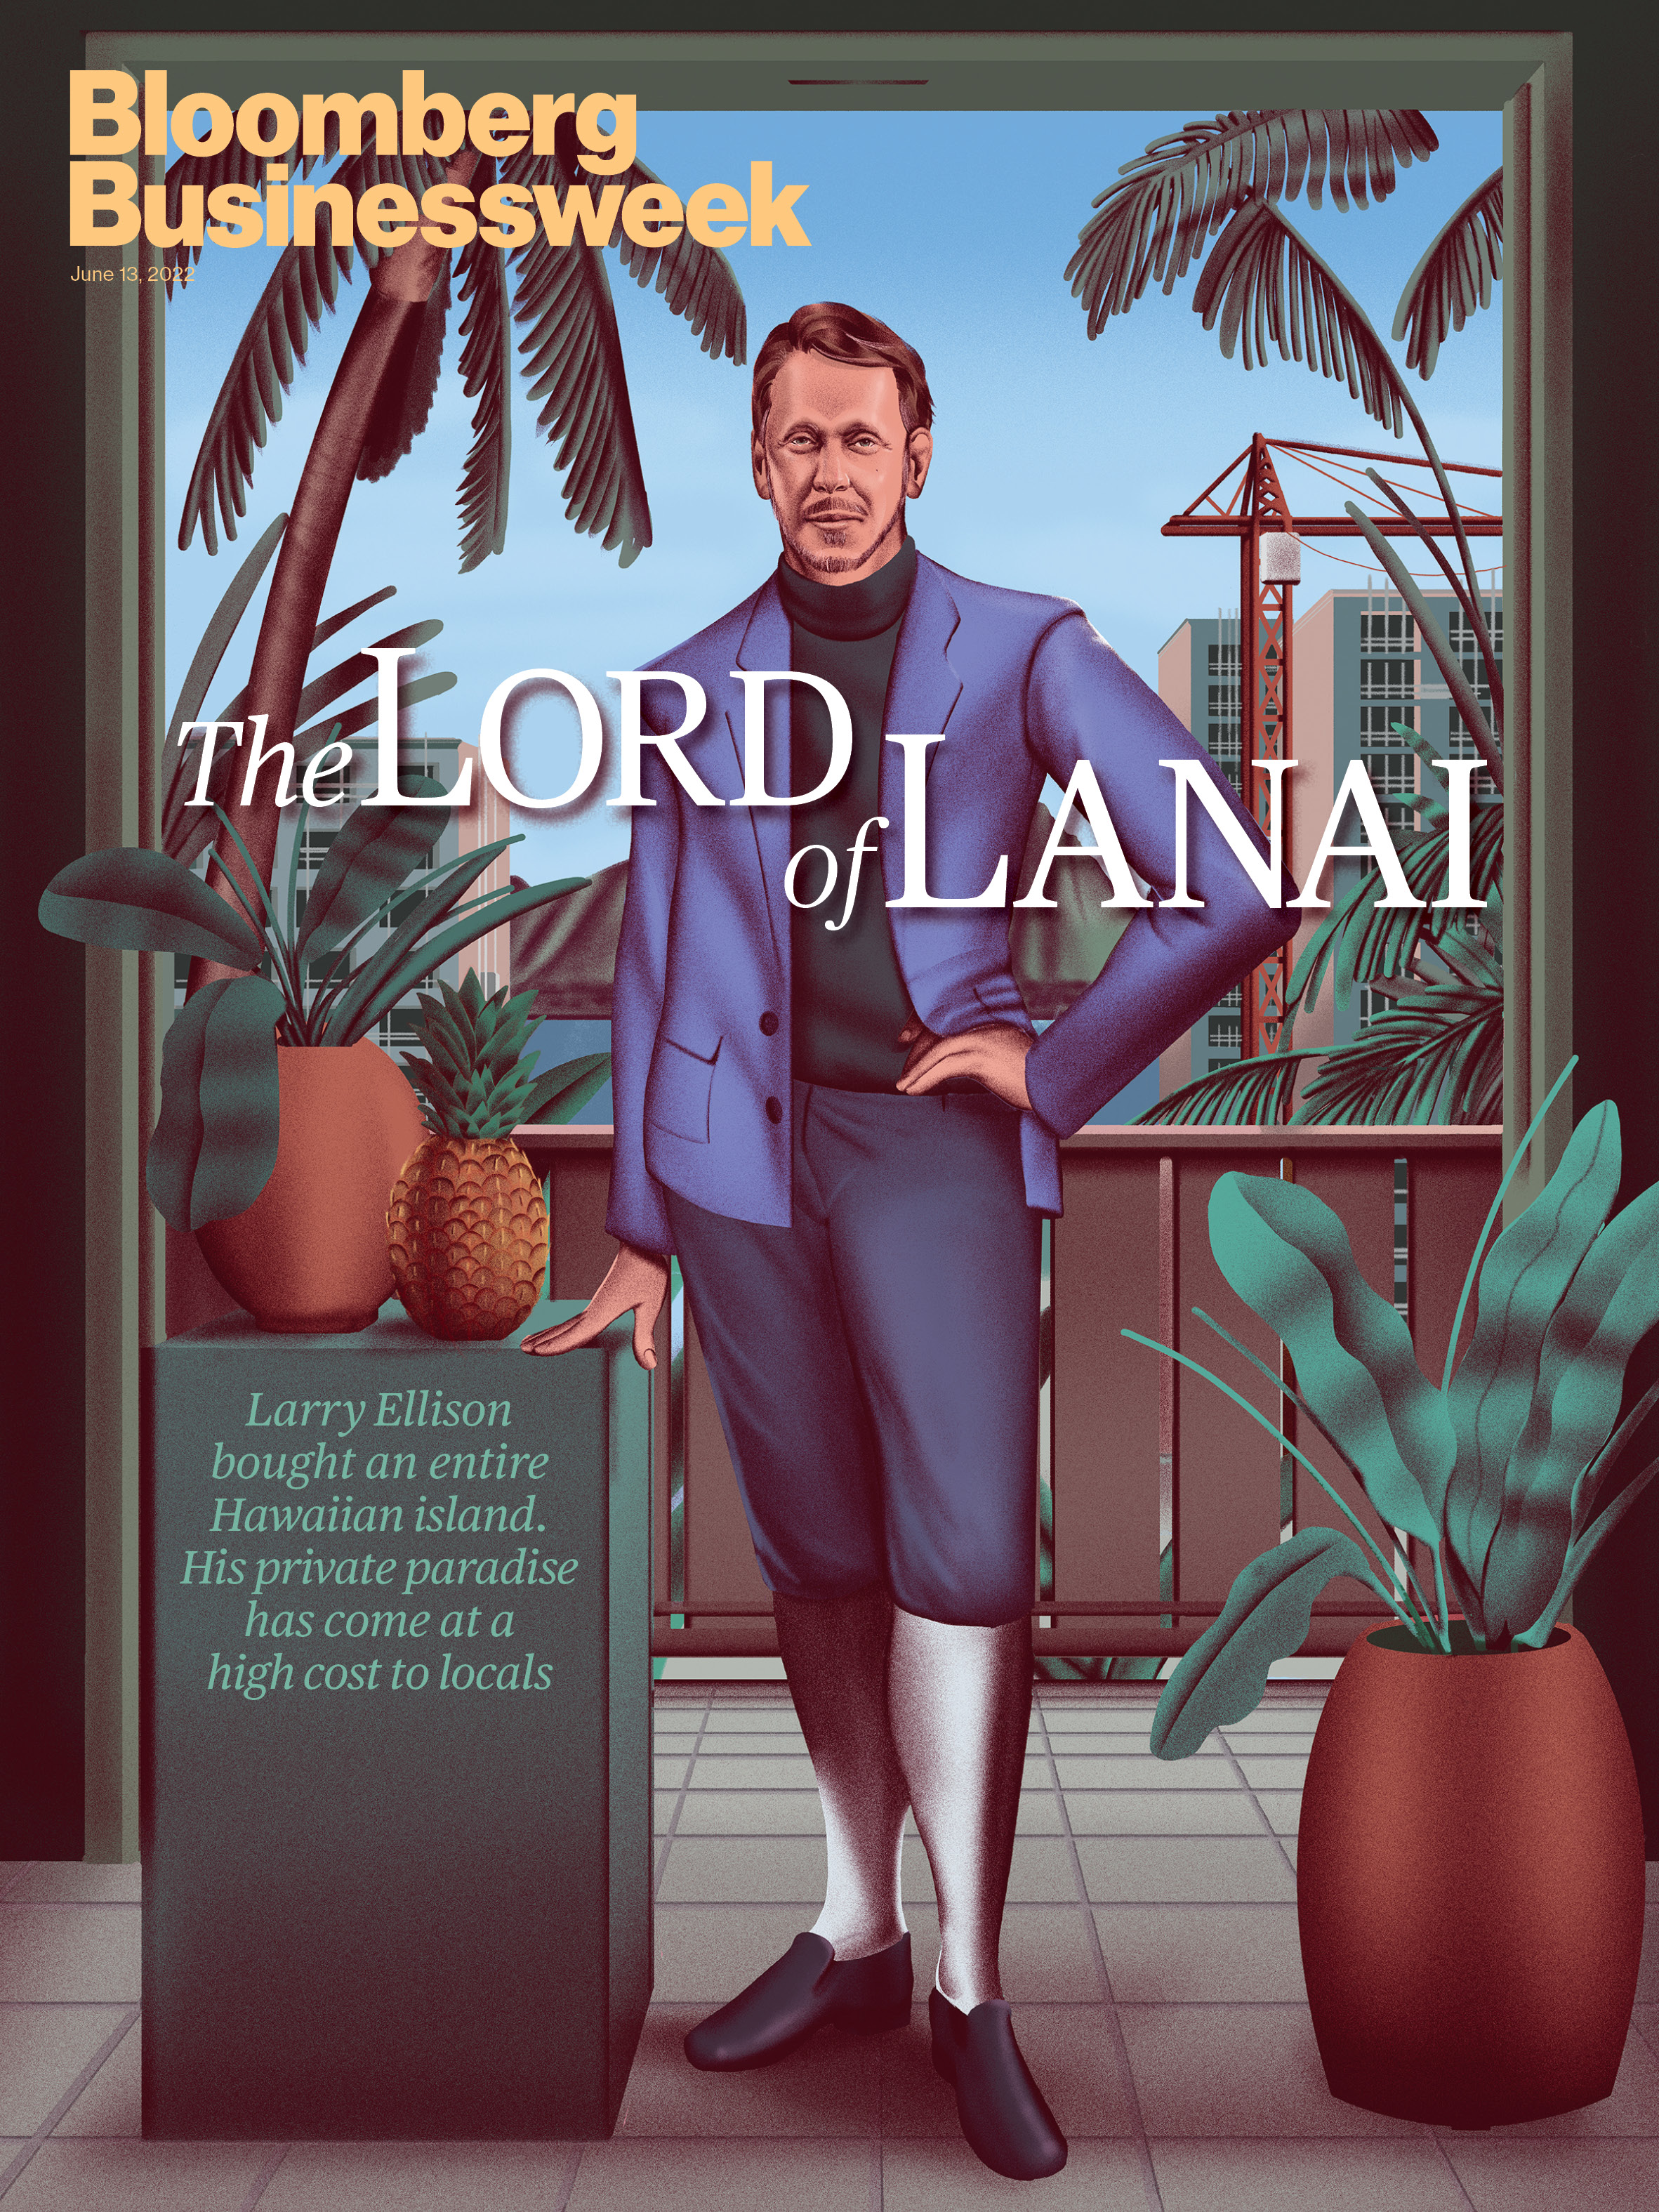 Bloomberg Businessweek “The Lord of Lanai” June 13, 2022